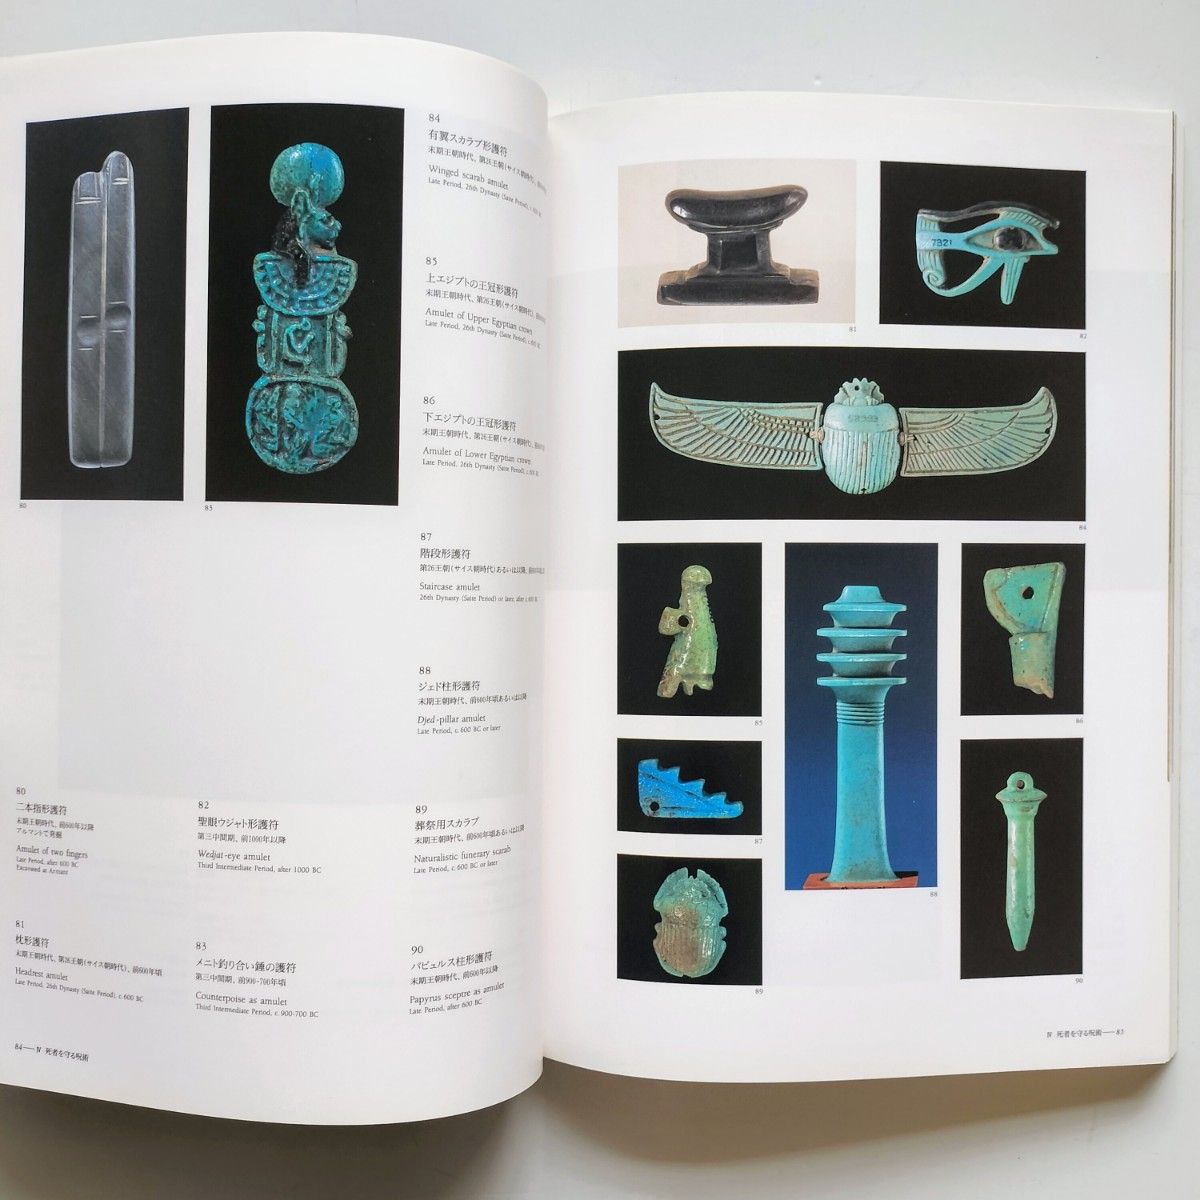 bz.  「大英博物館古代エジプト展」図録 : 永遠の美と生命